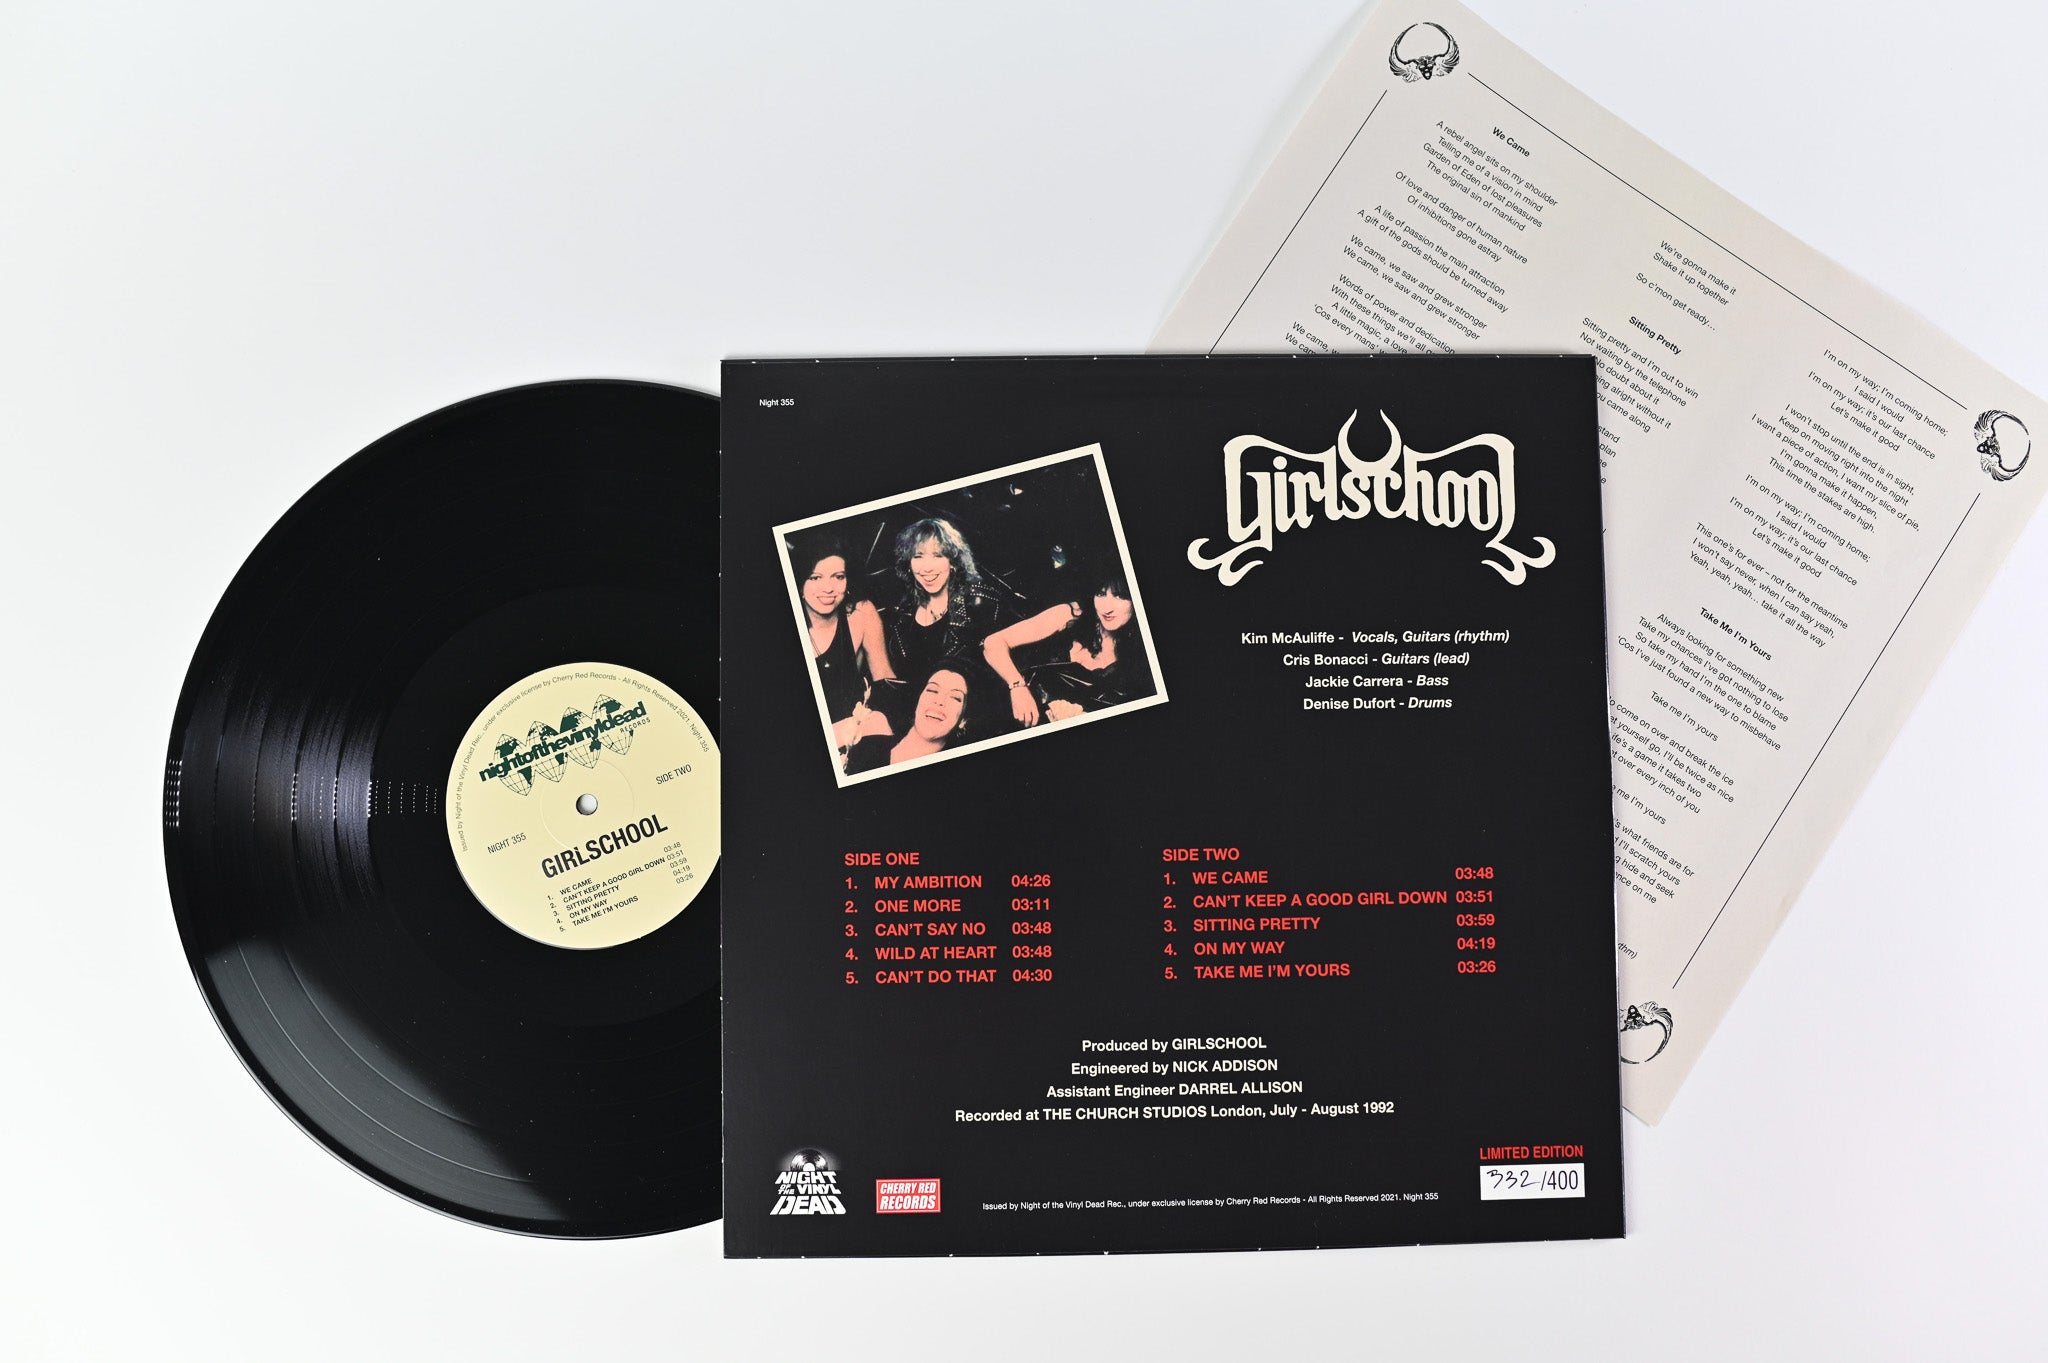 Girlschool - Girlschool on Night of the Vinyl Dead Ltd Numbered Pressing